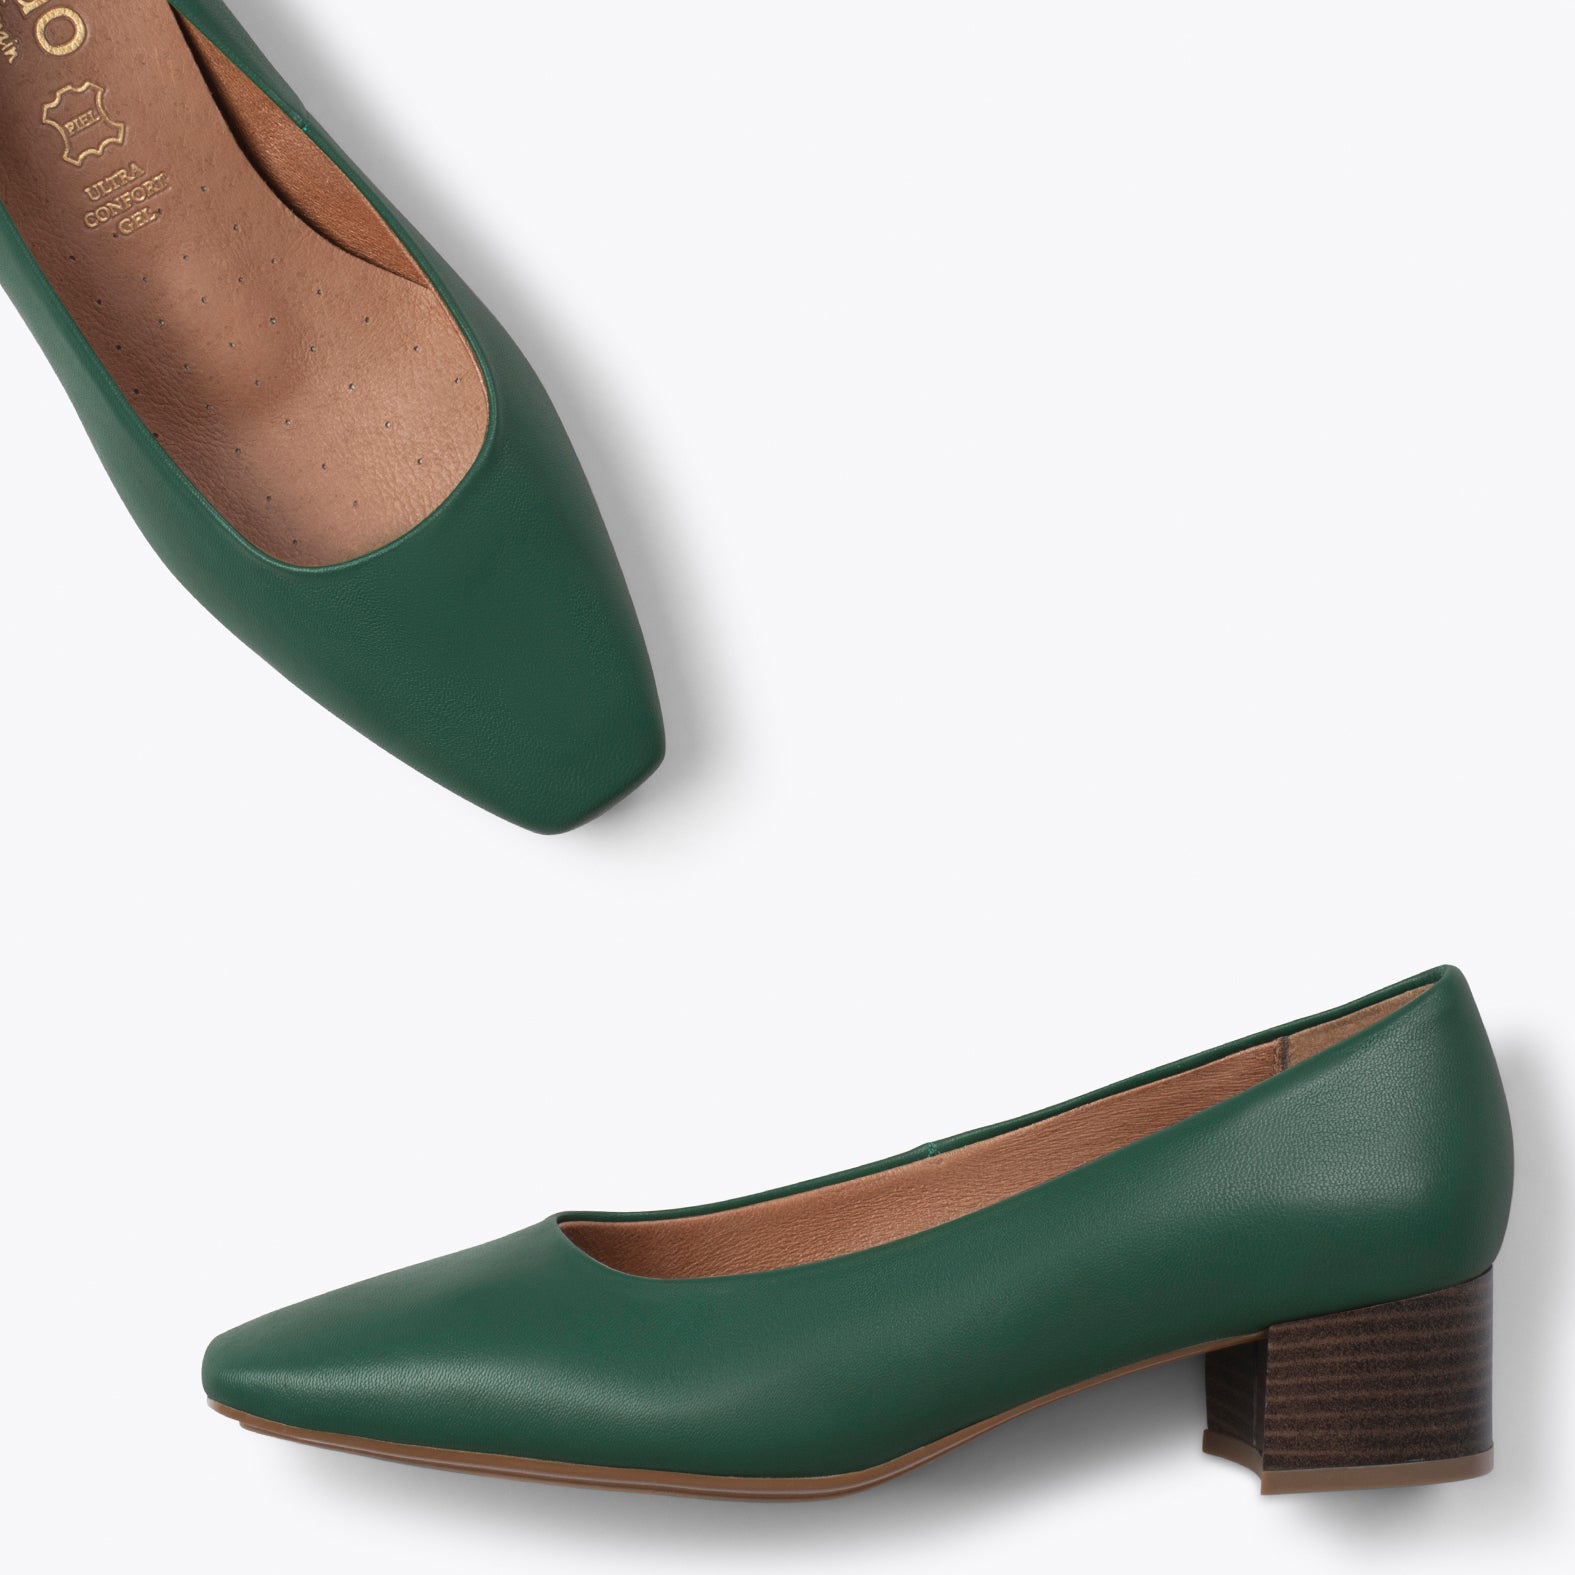 URBAN LADY – GREEN nappa leather low heels